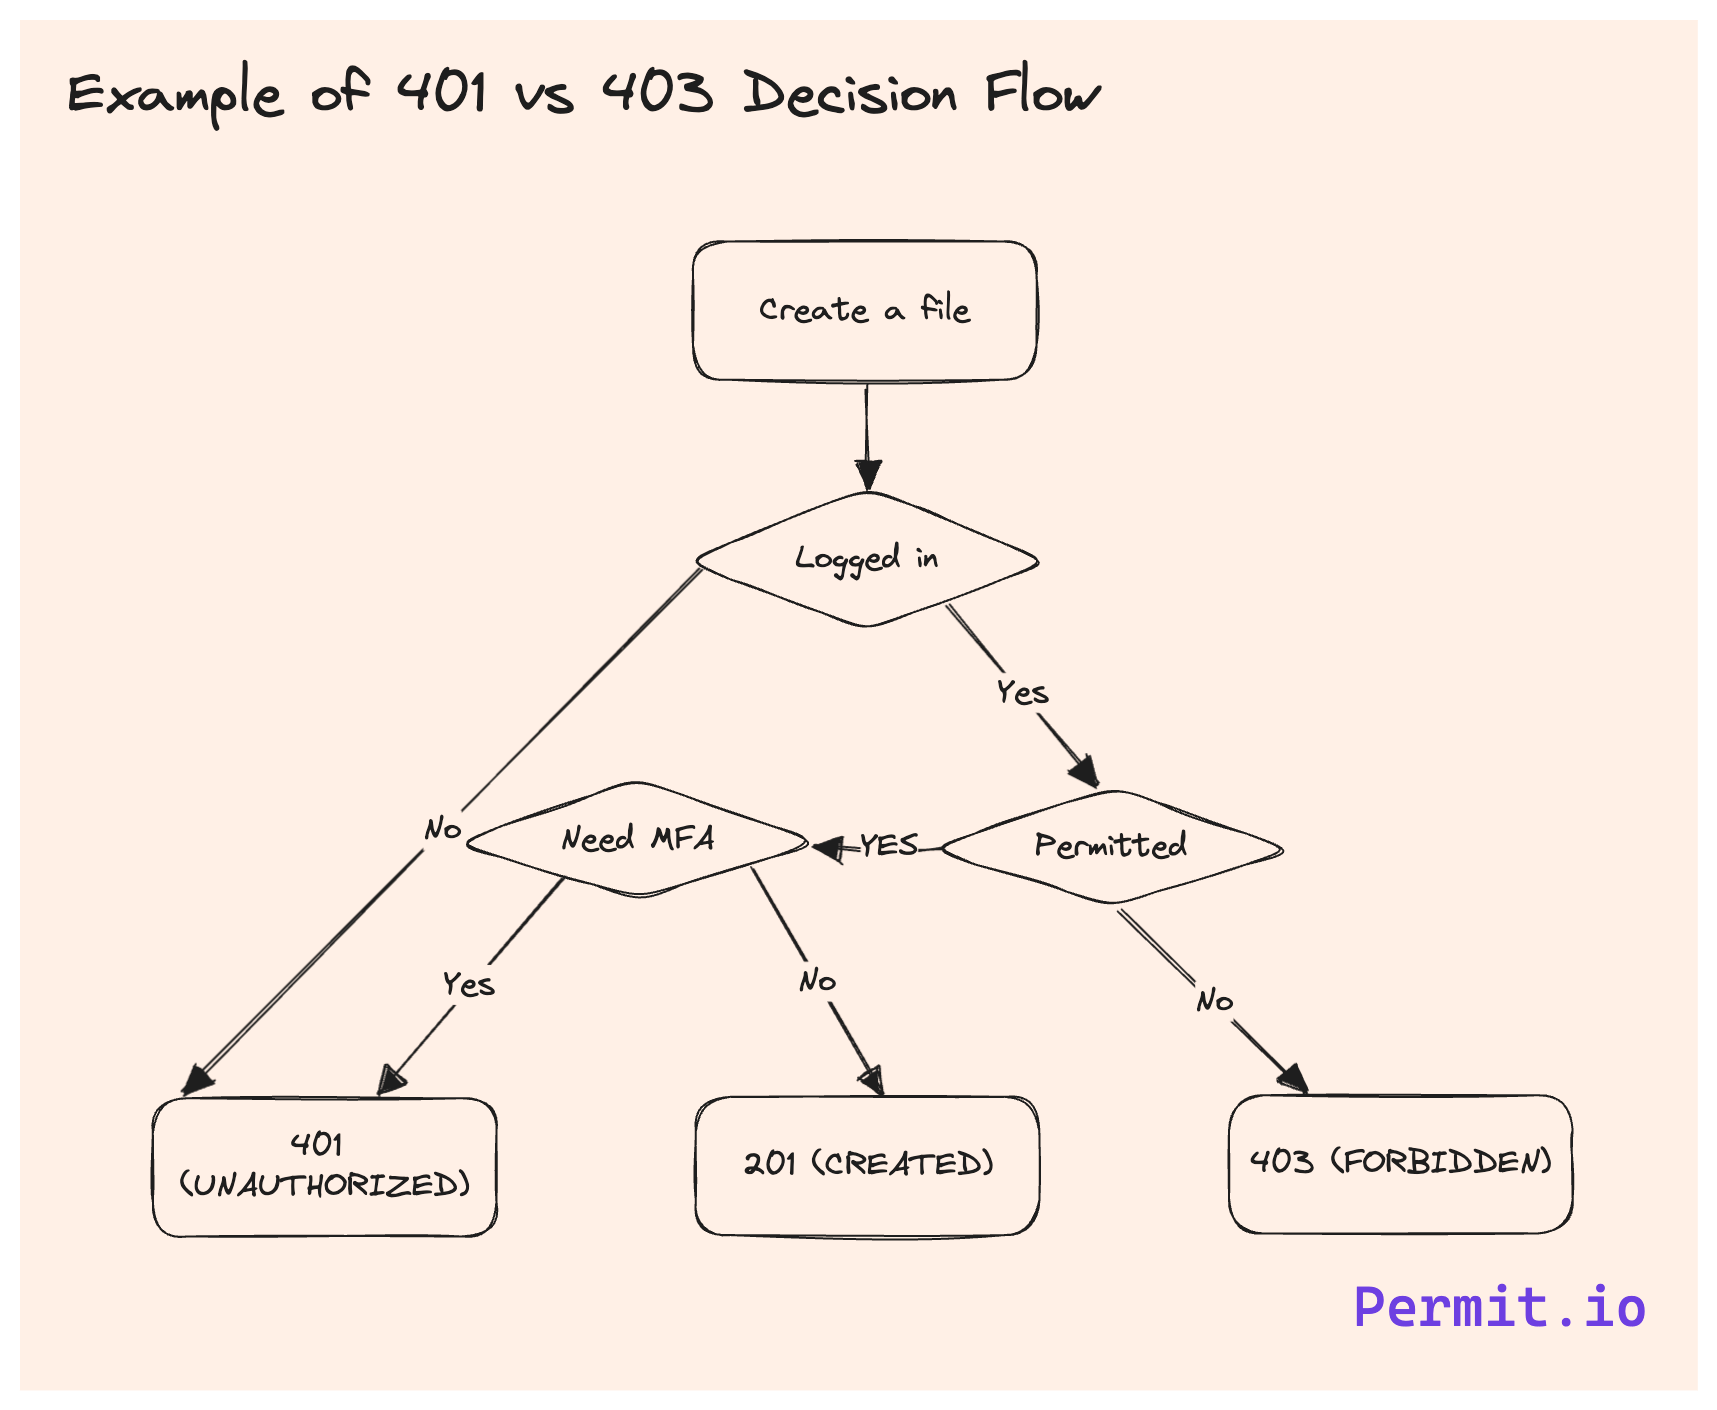 Example of 401 vs 403 Decision Flow